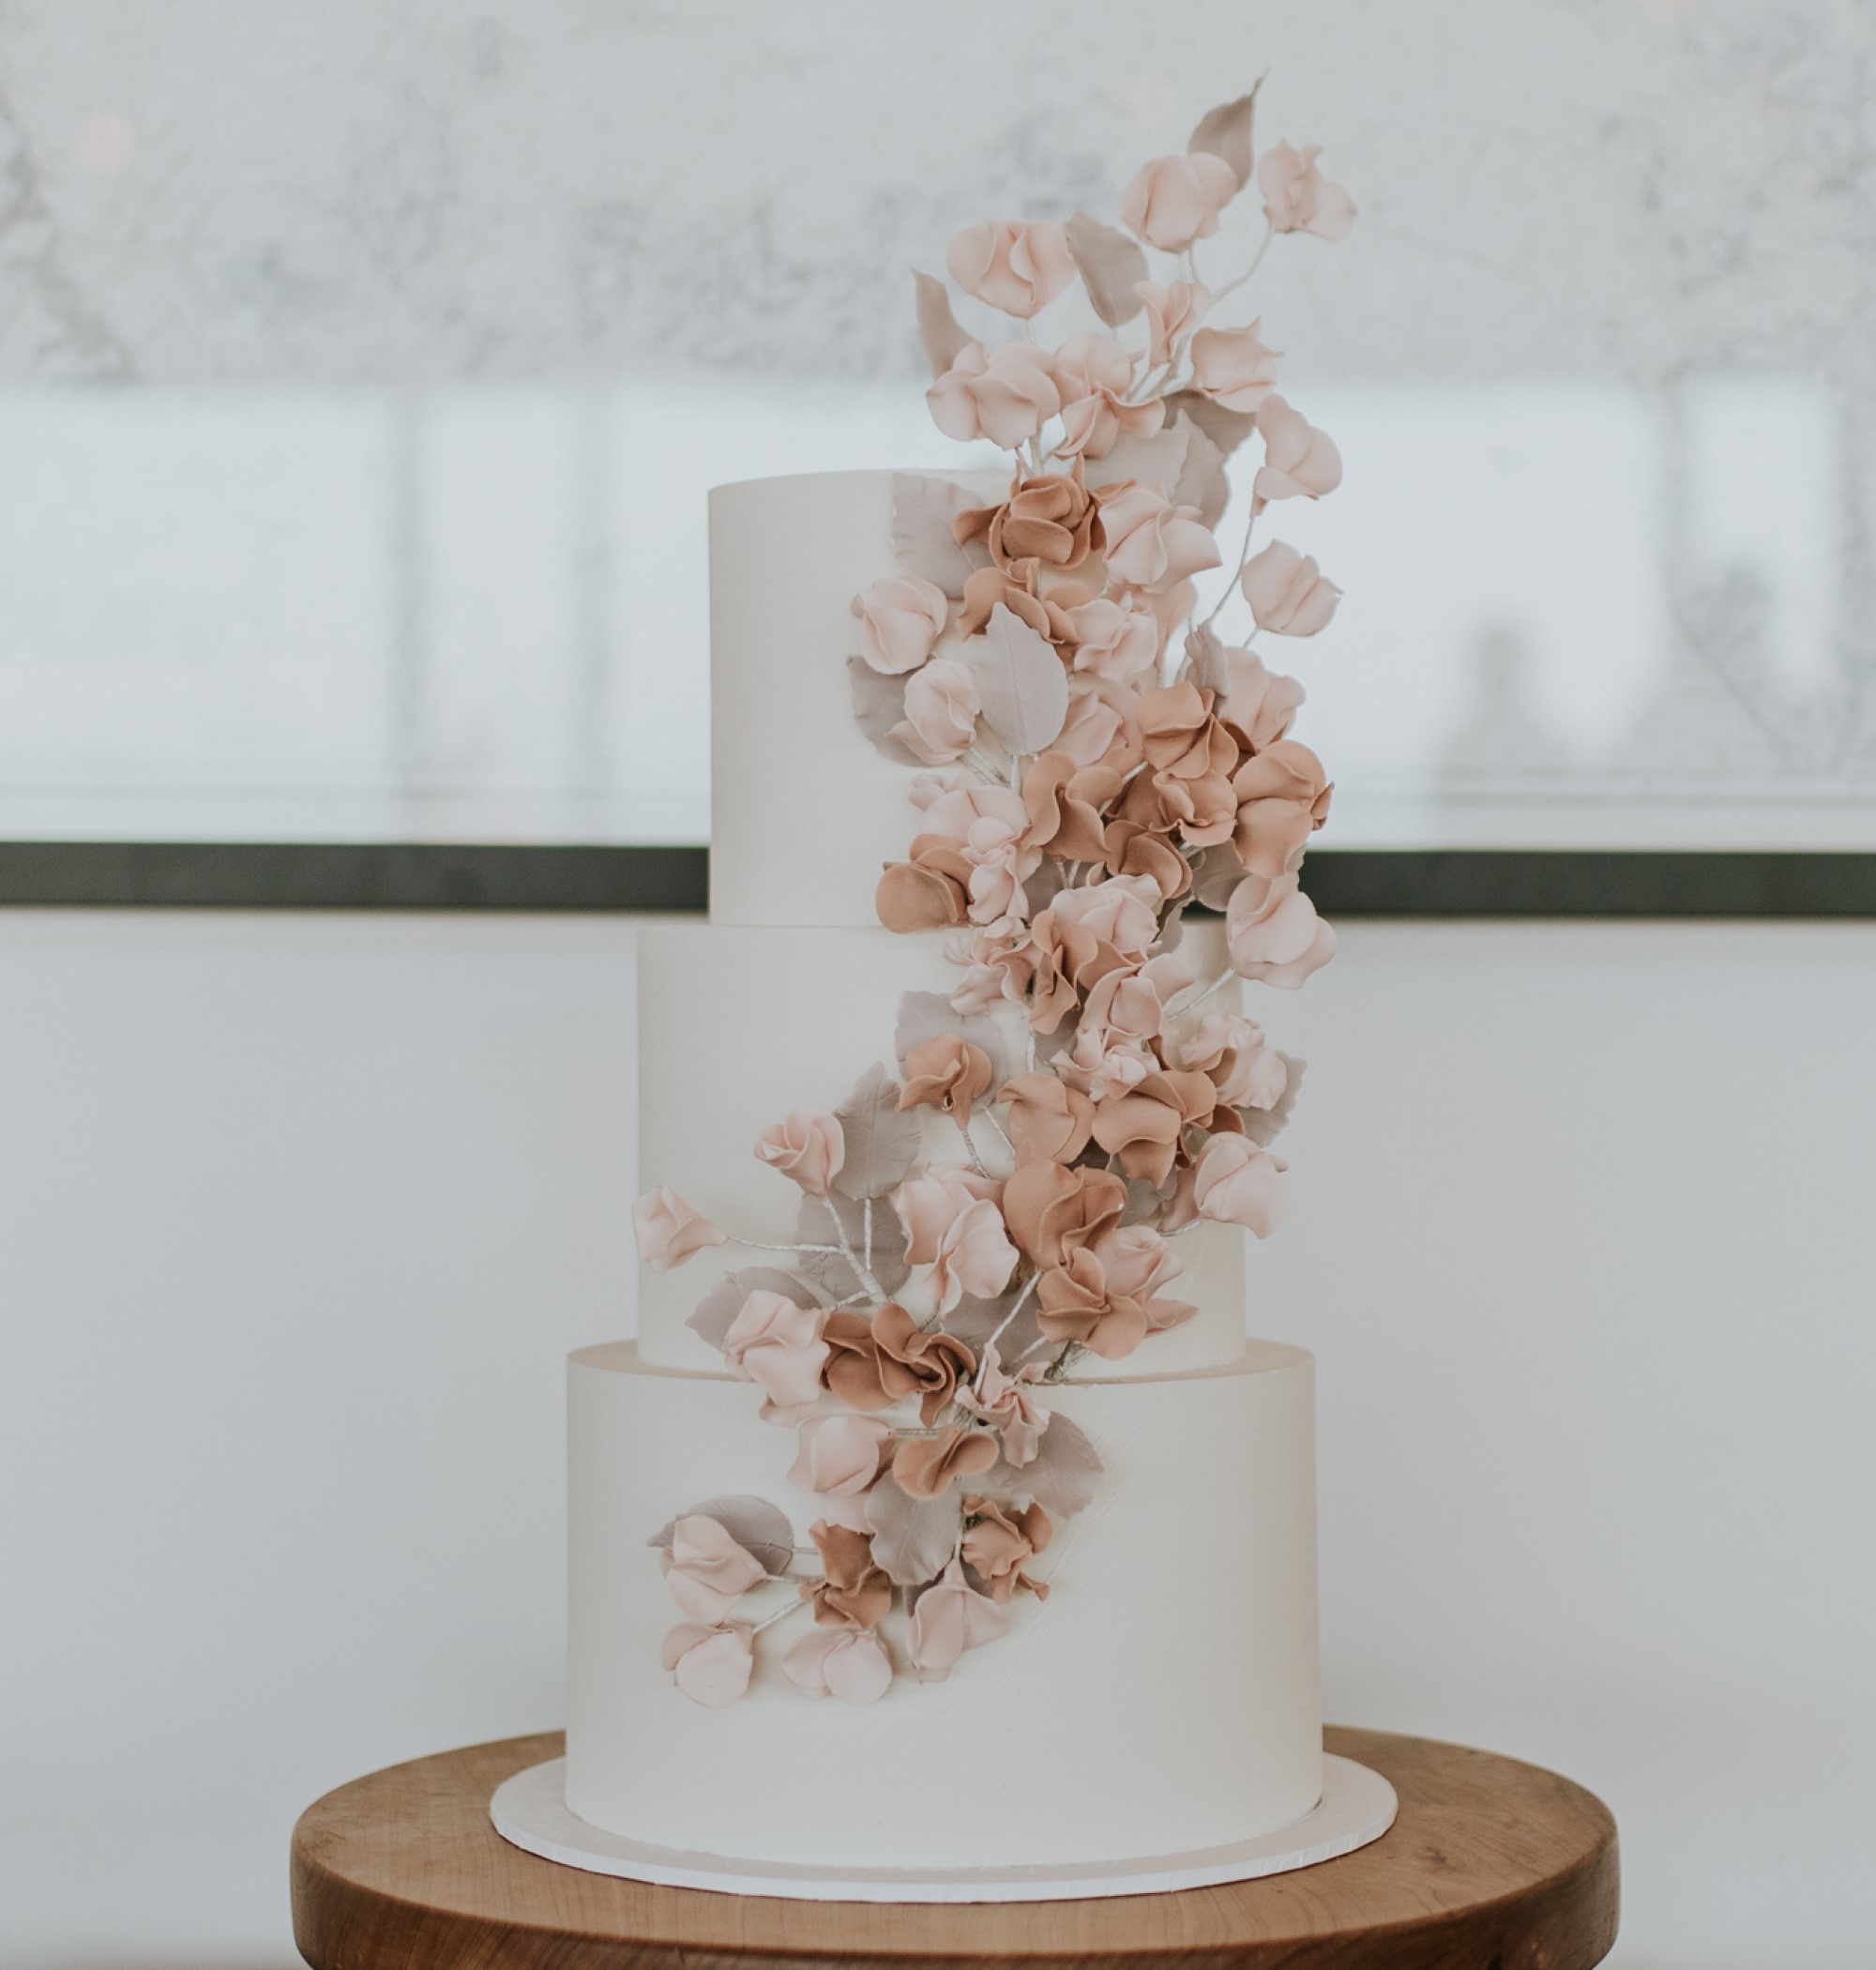 Triple tiered white wedding cake